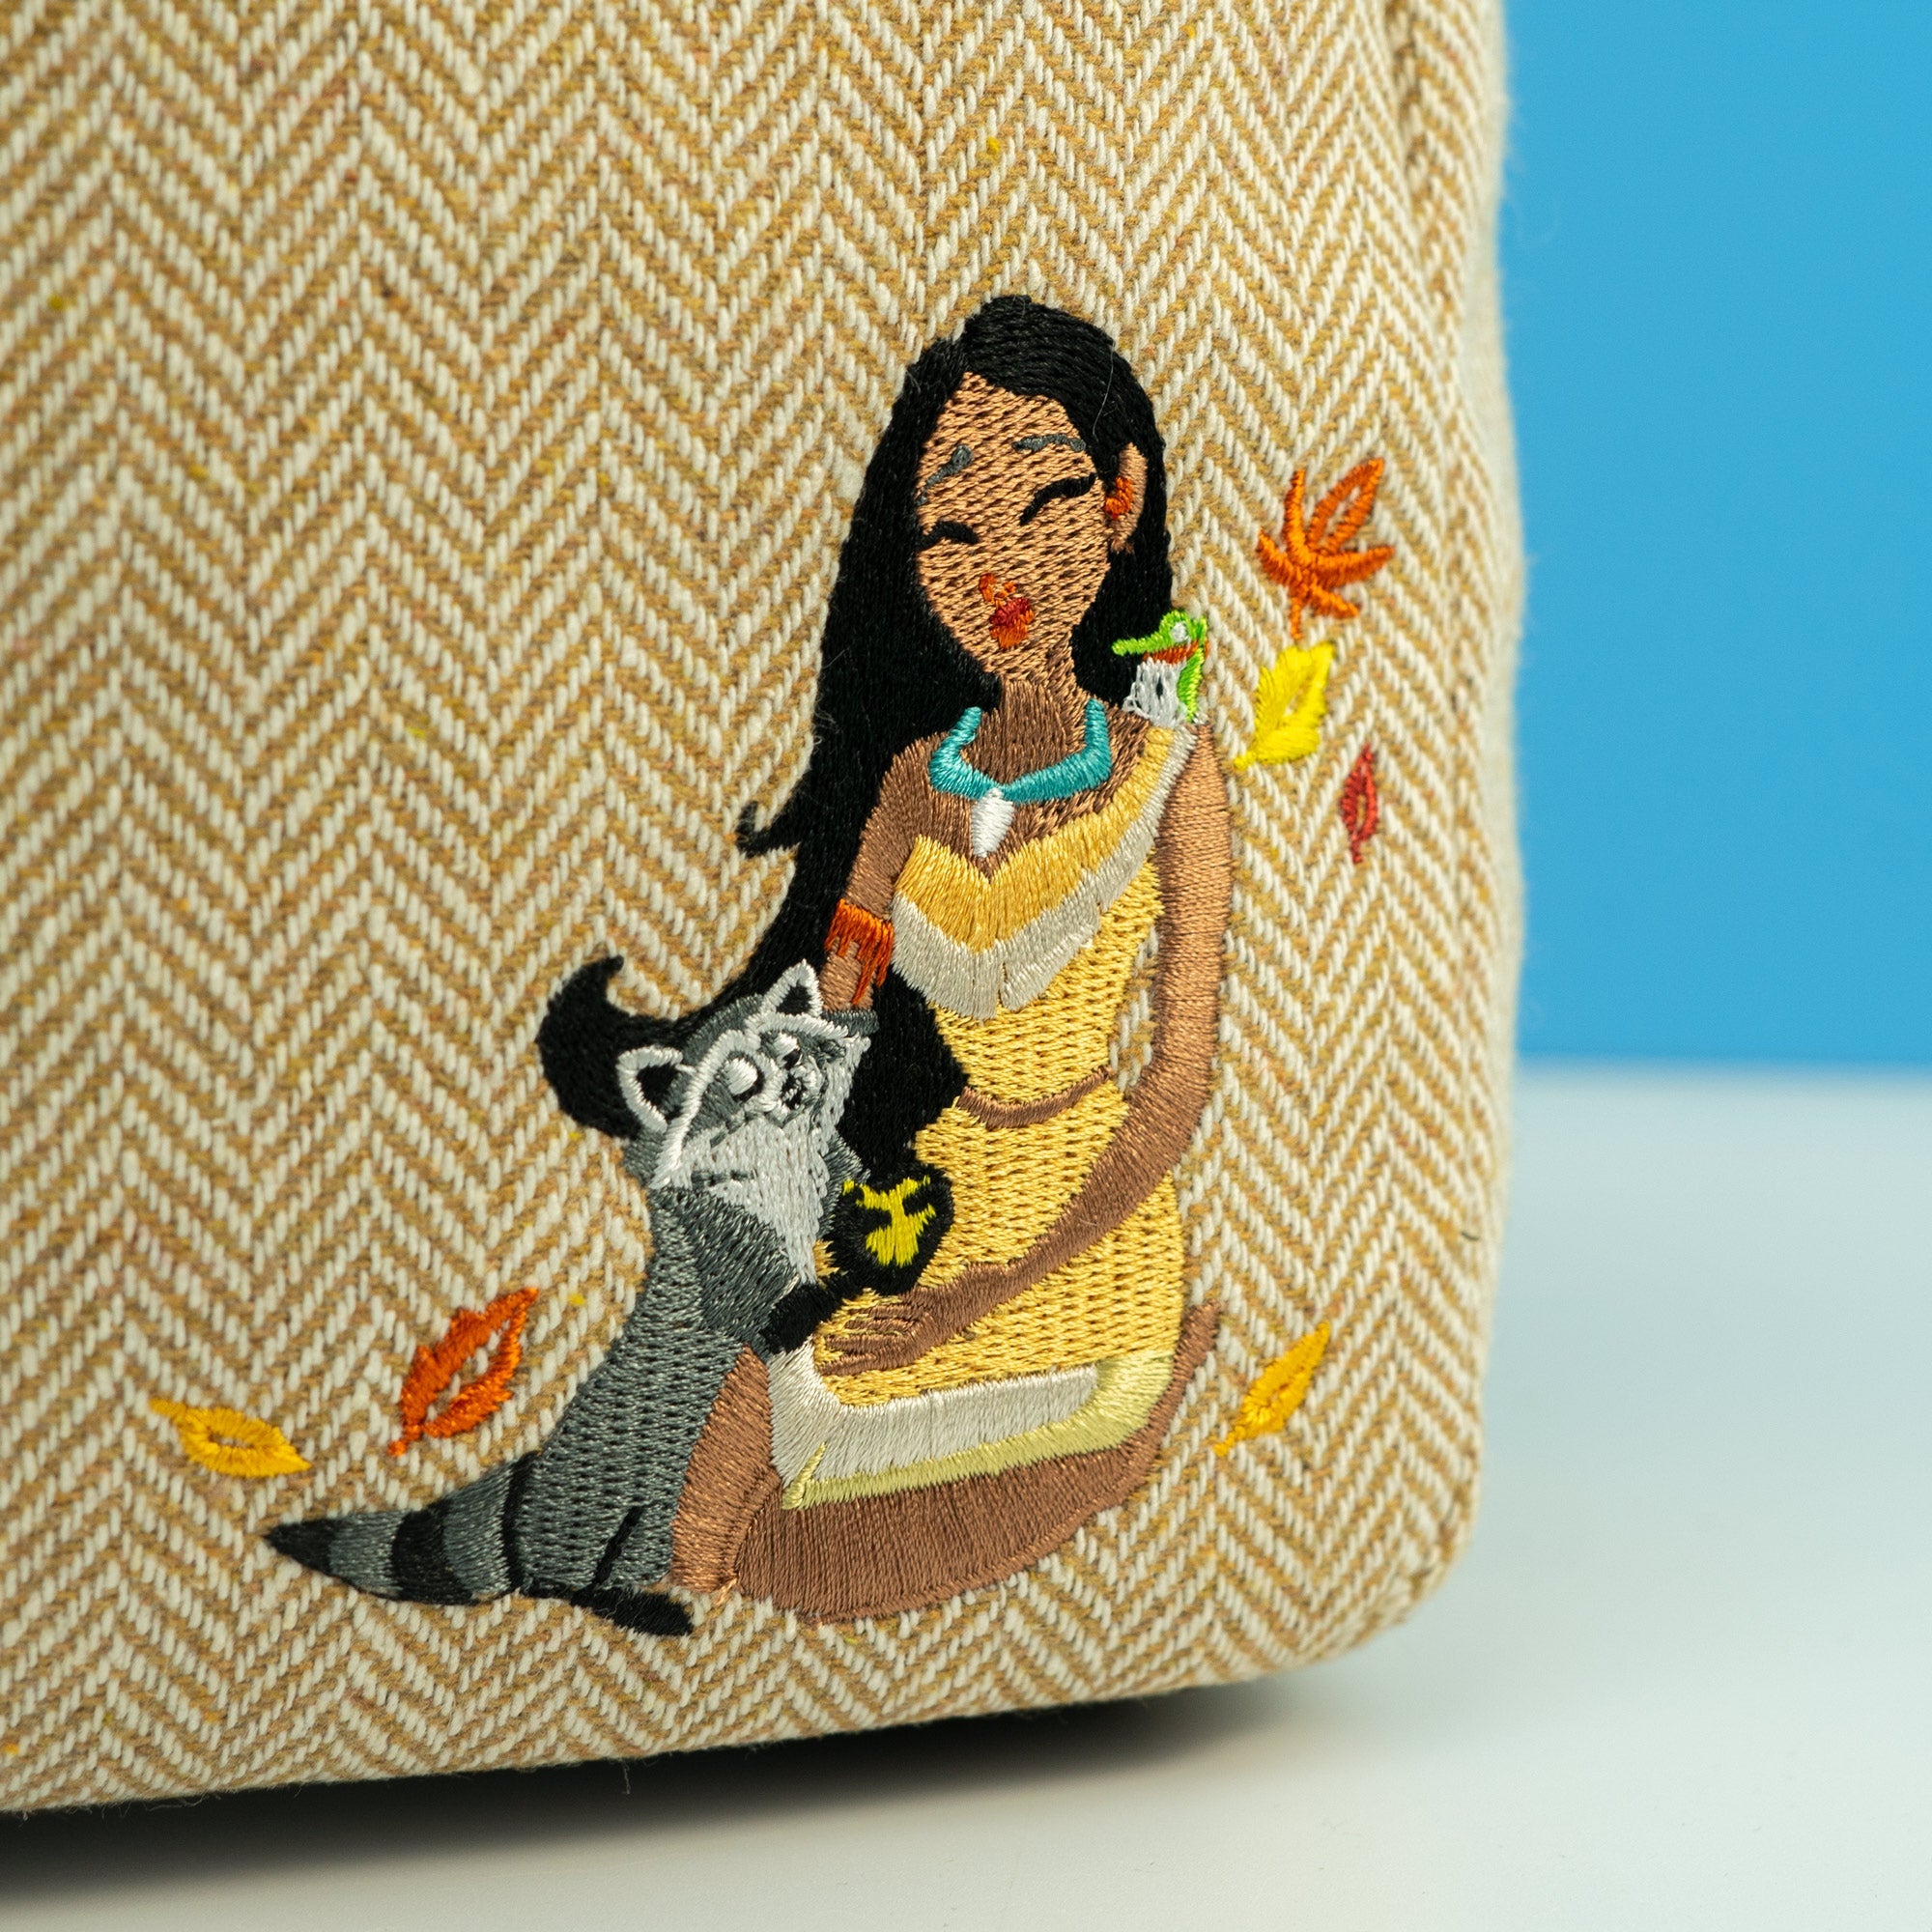 Loungefly x Disney Pocahontas and Meeko Woven Mini Backpack - GeekCore